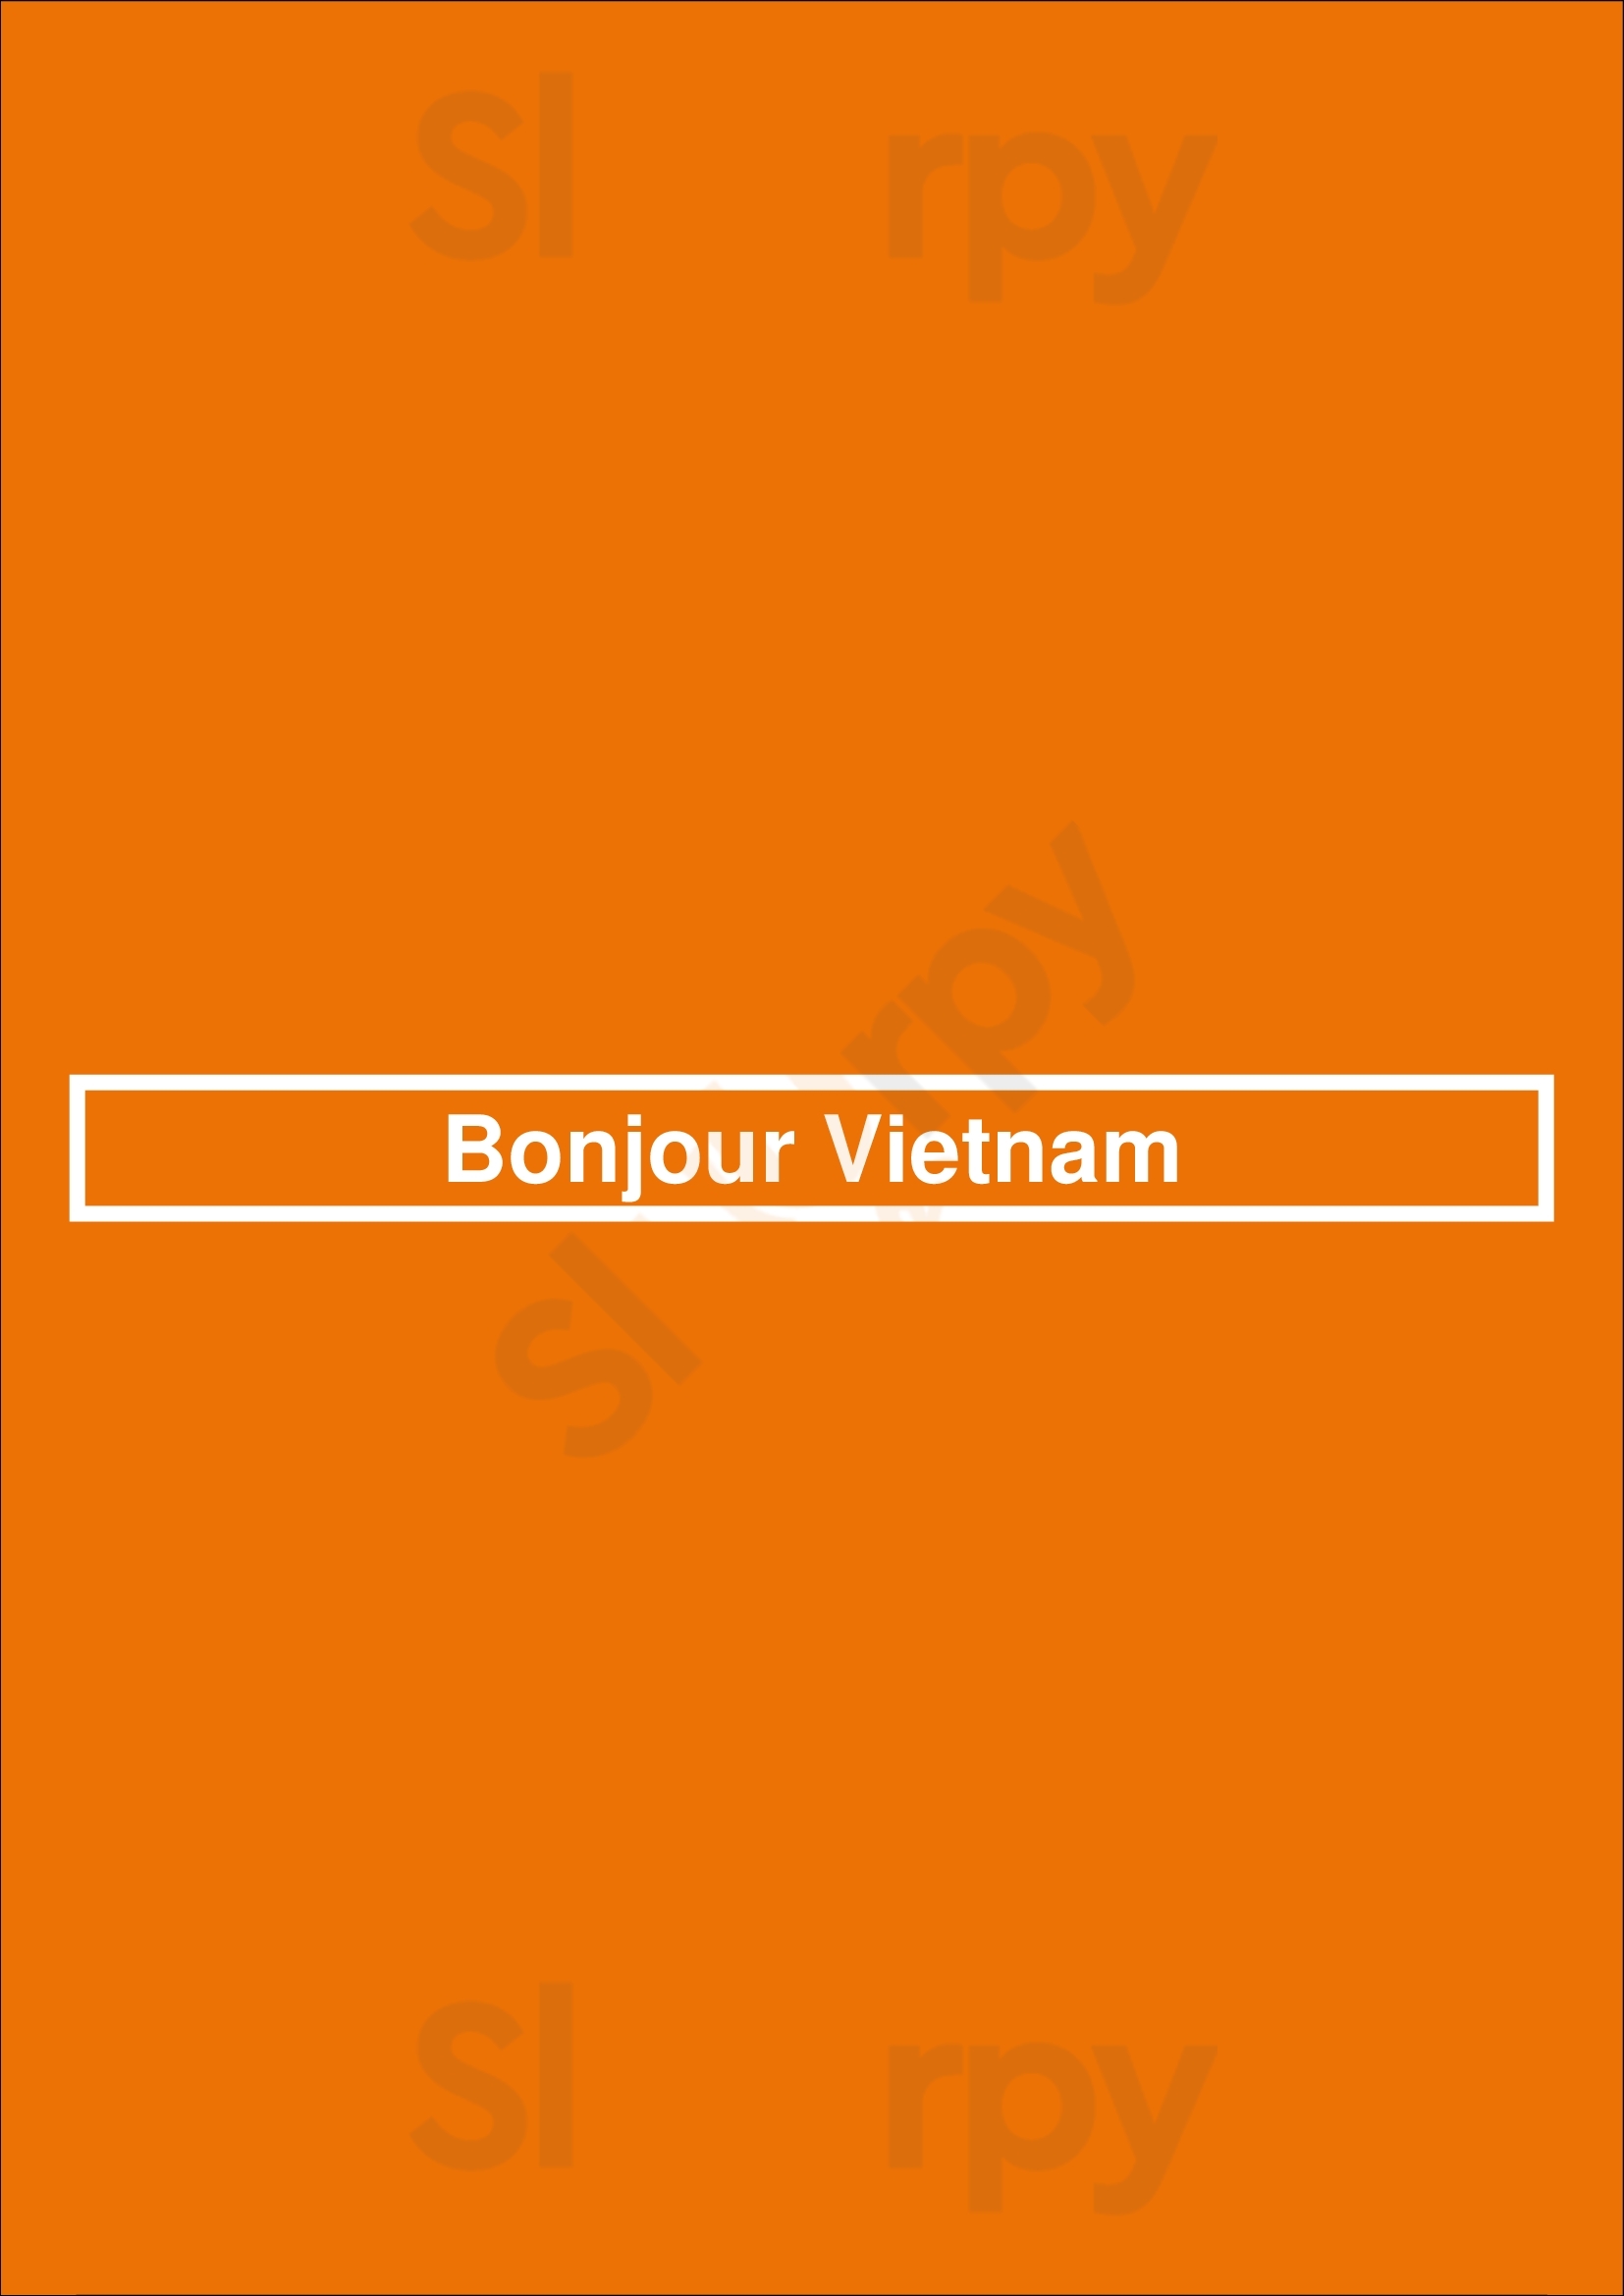 Bonjour Vietnam Lyon Menu - 1